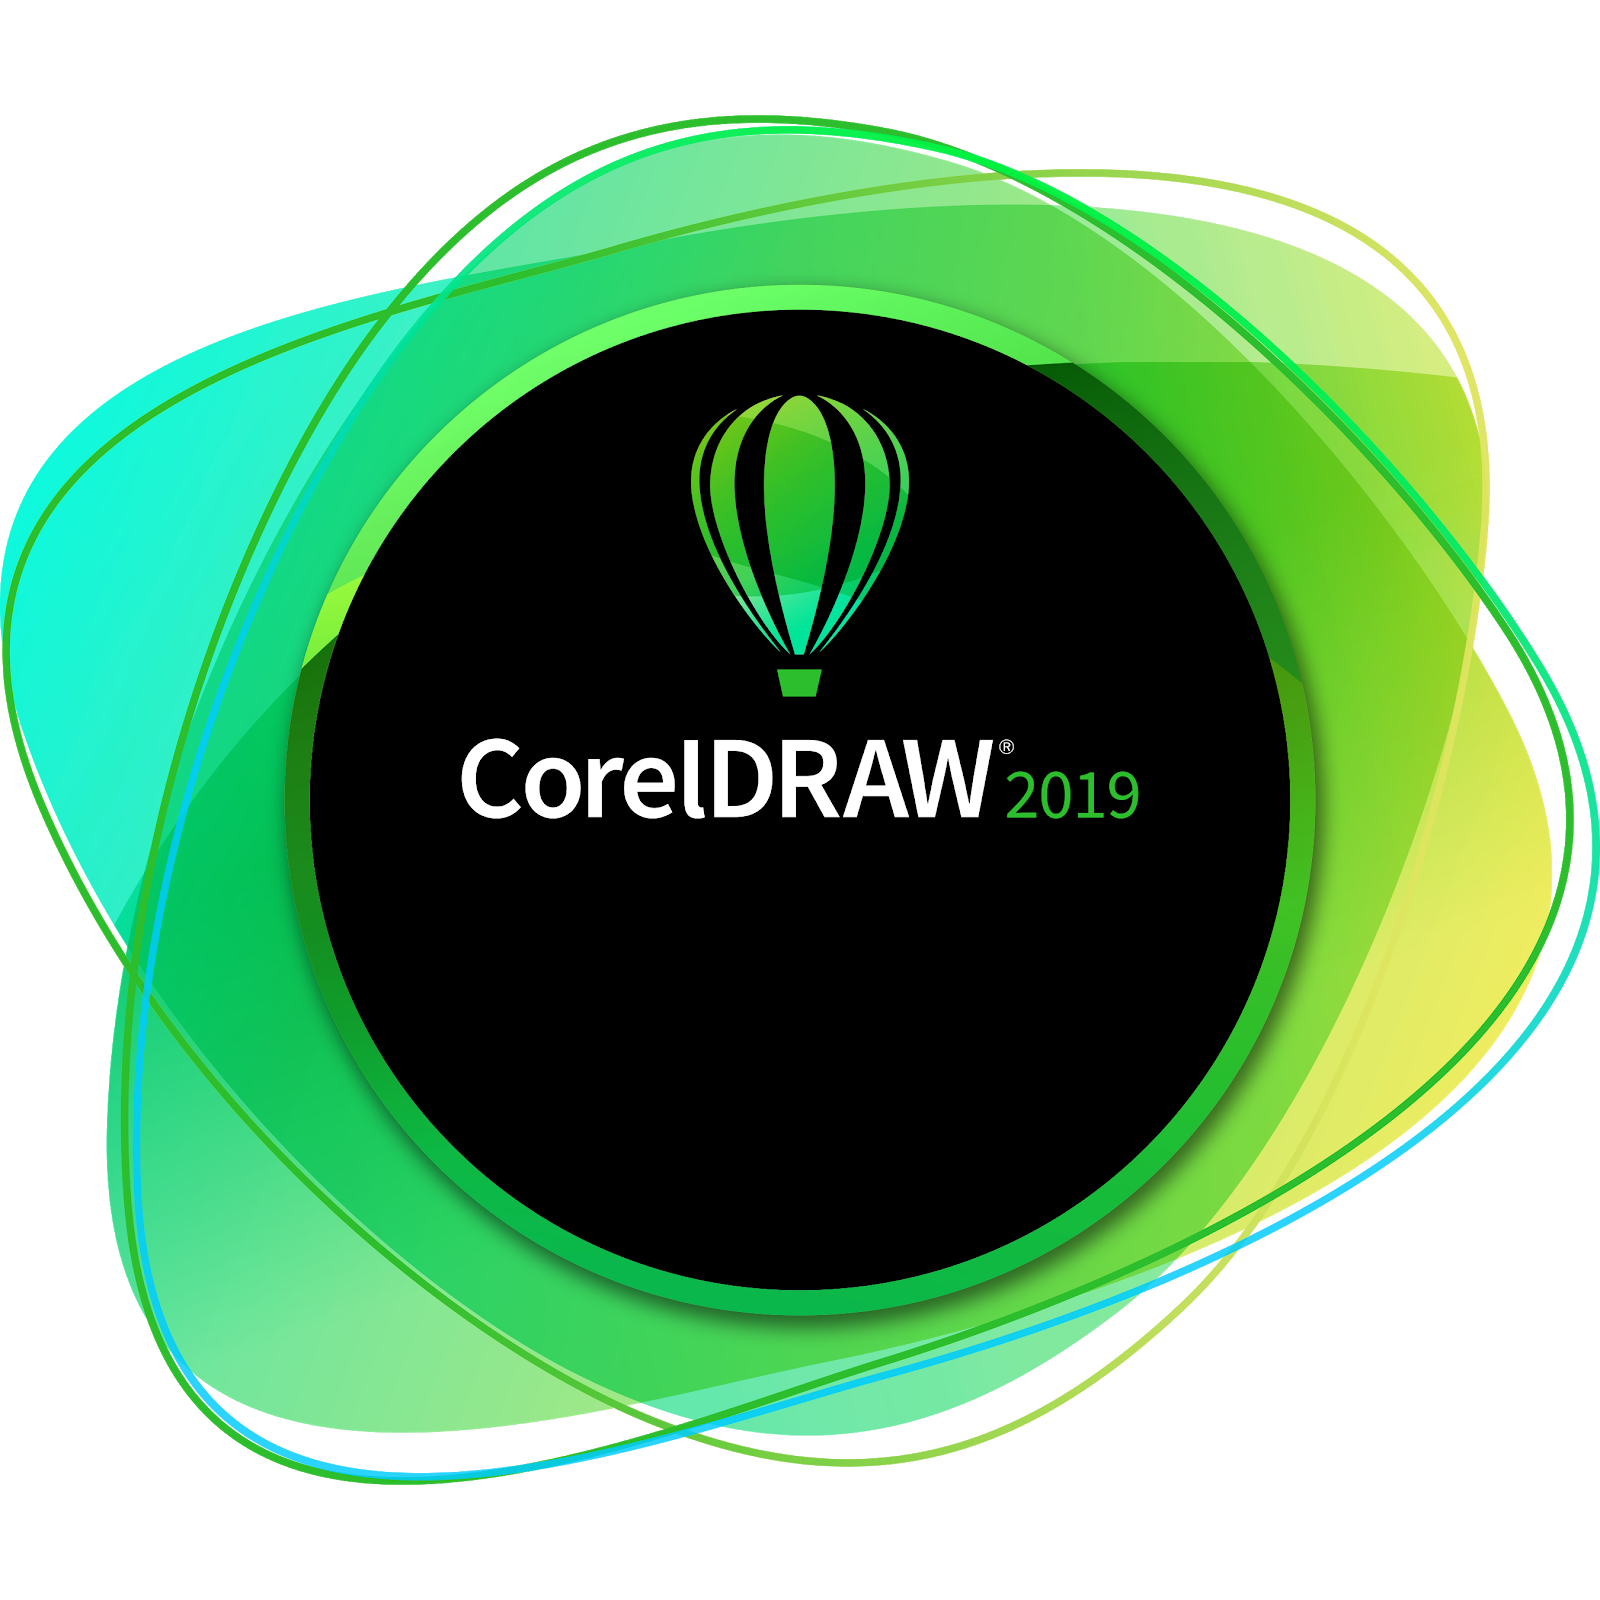 Корл телефон. Coreldraw. Coreldraw логотип. Corel иконка. Coreldraw 2019.